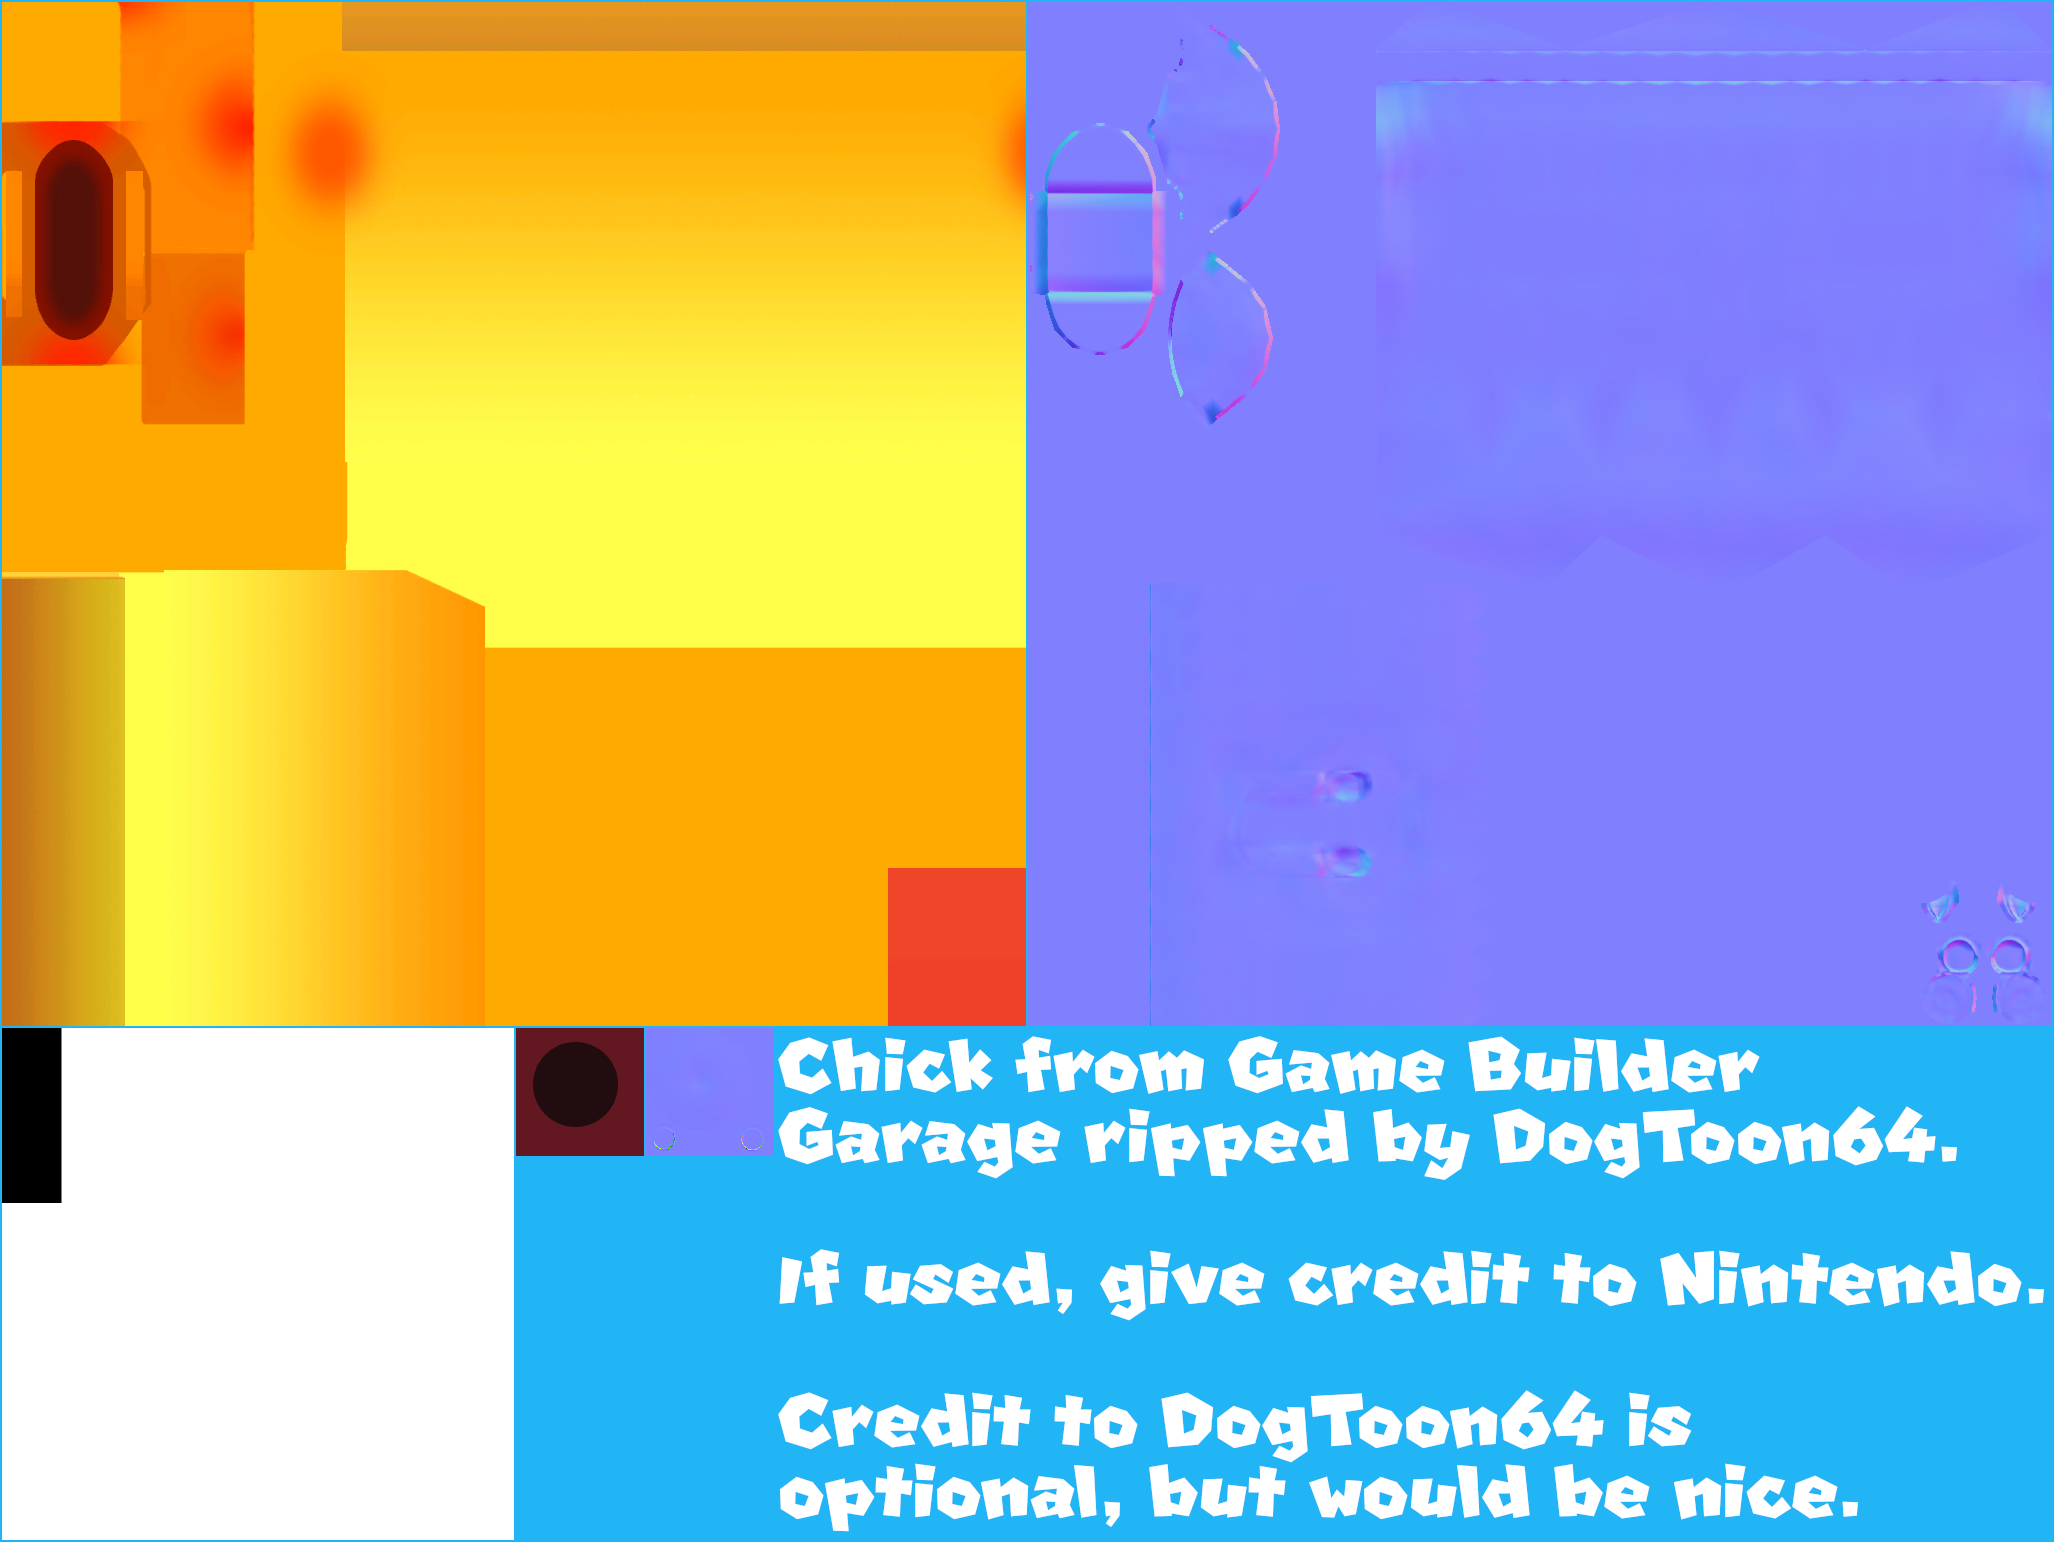 Game Builder Garage - Chick